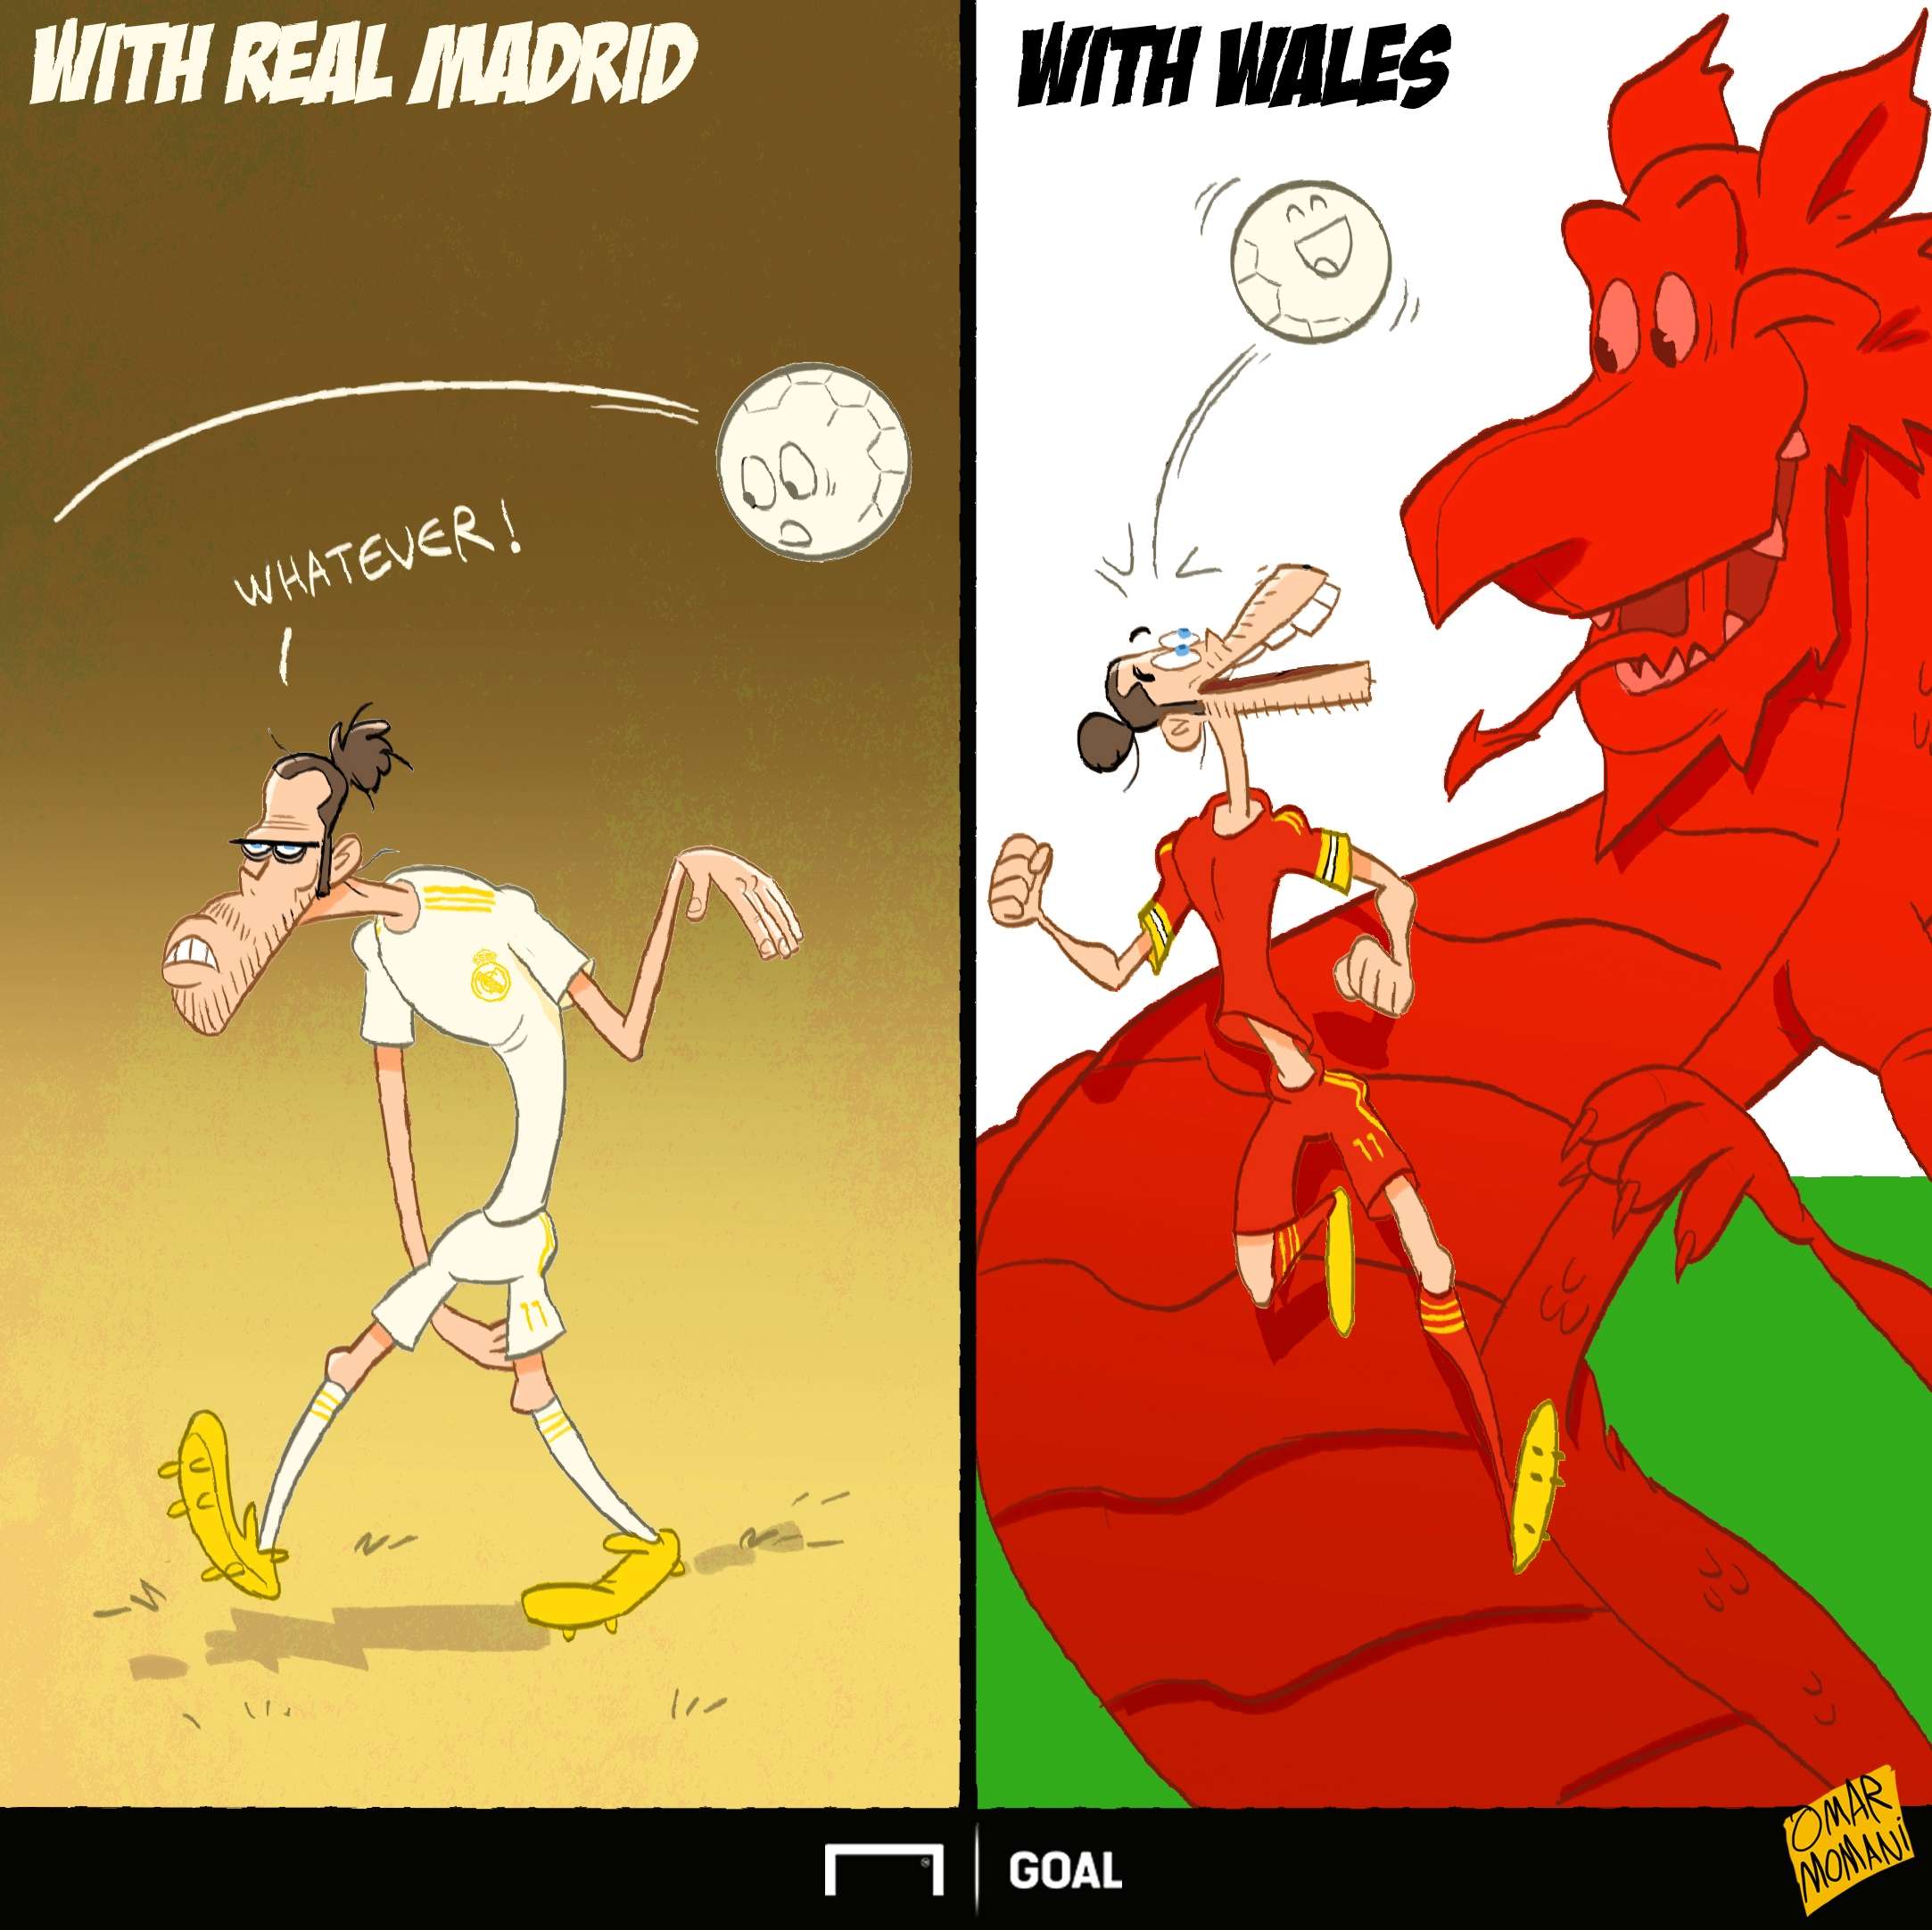 Cartoon: Bale, Madrid, Wales